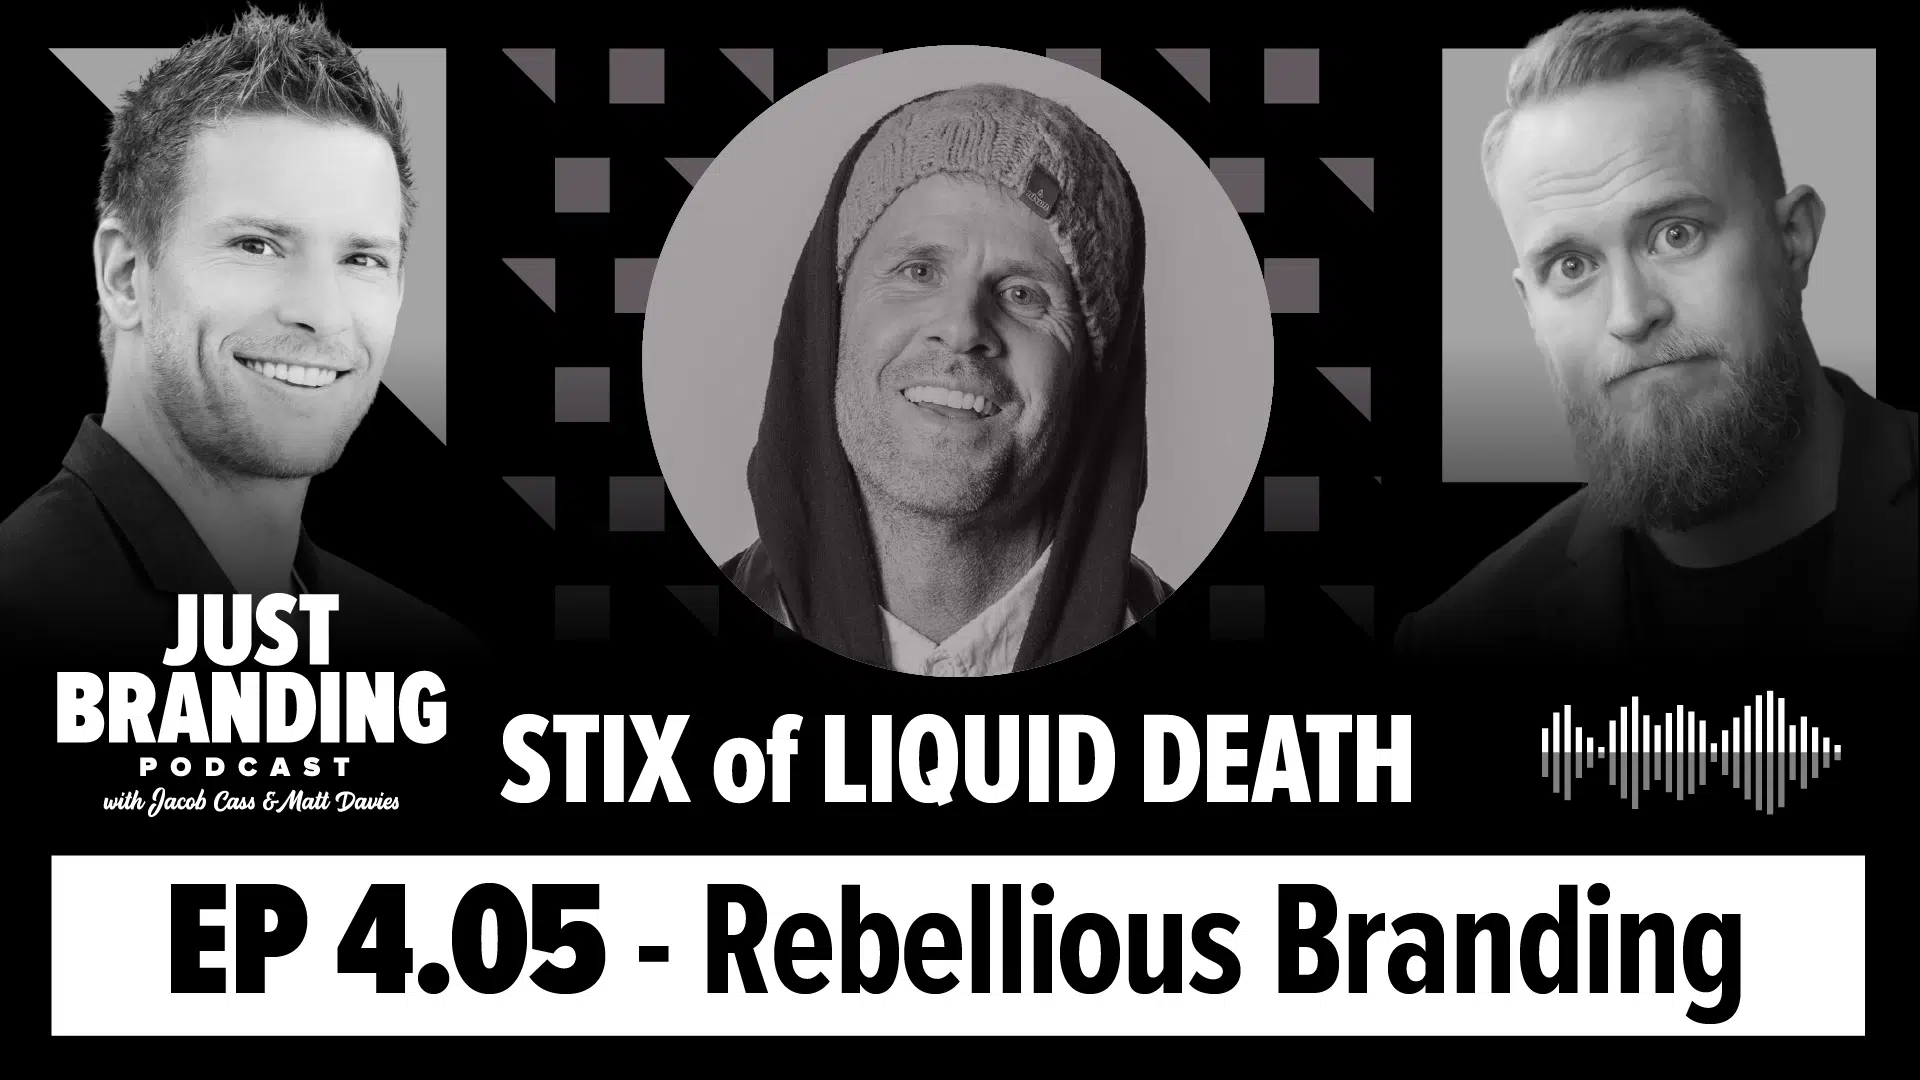 Rebellious Branding with Stix of Liquid Death